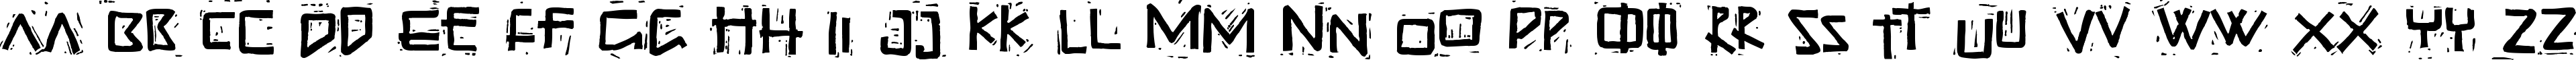 Пример написания английского алфавита шрифтом Guadalupe